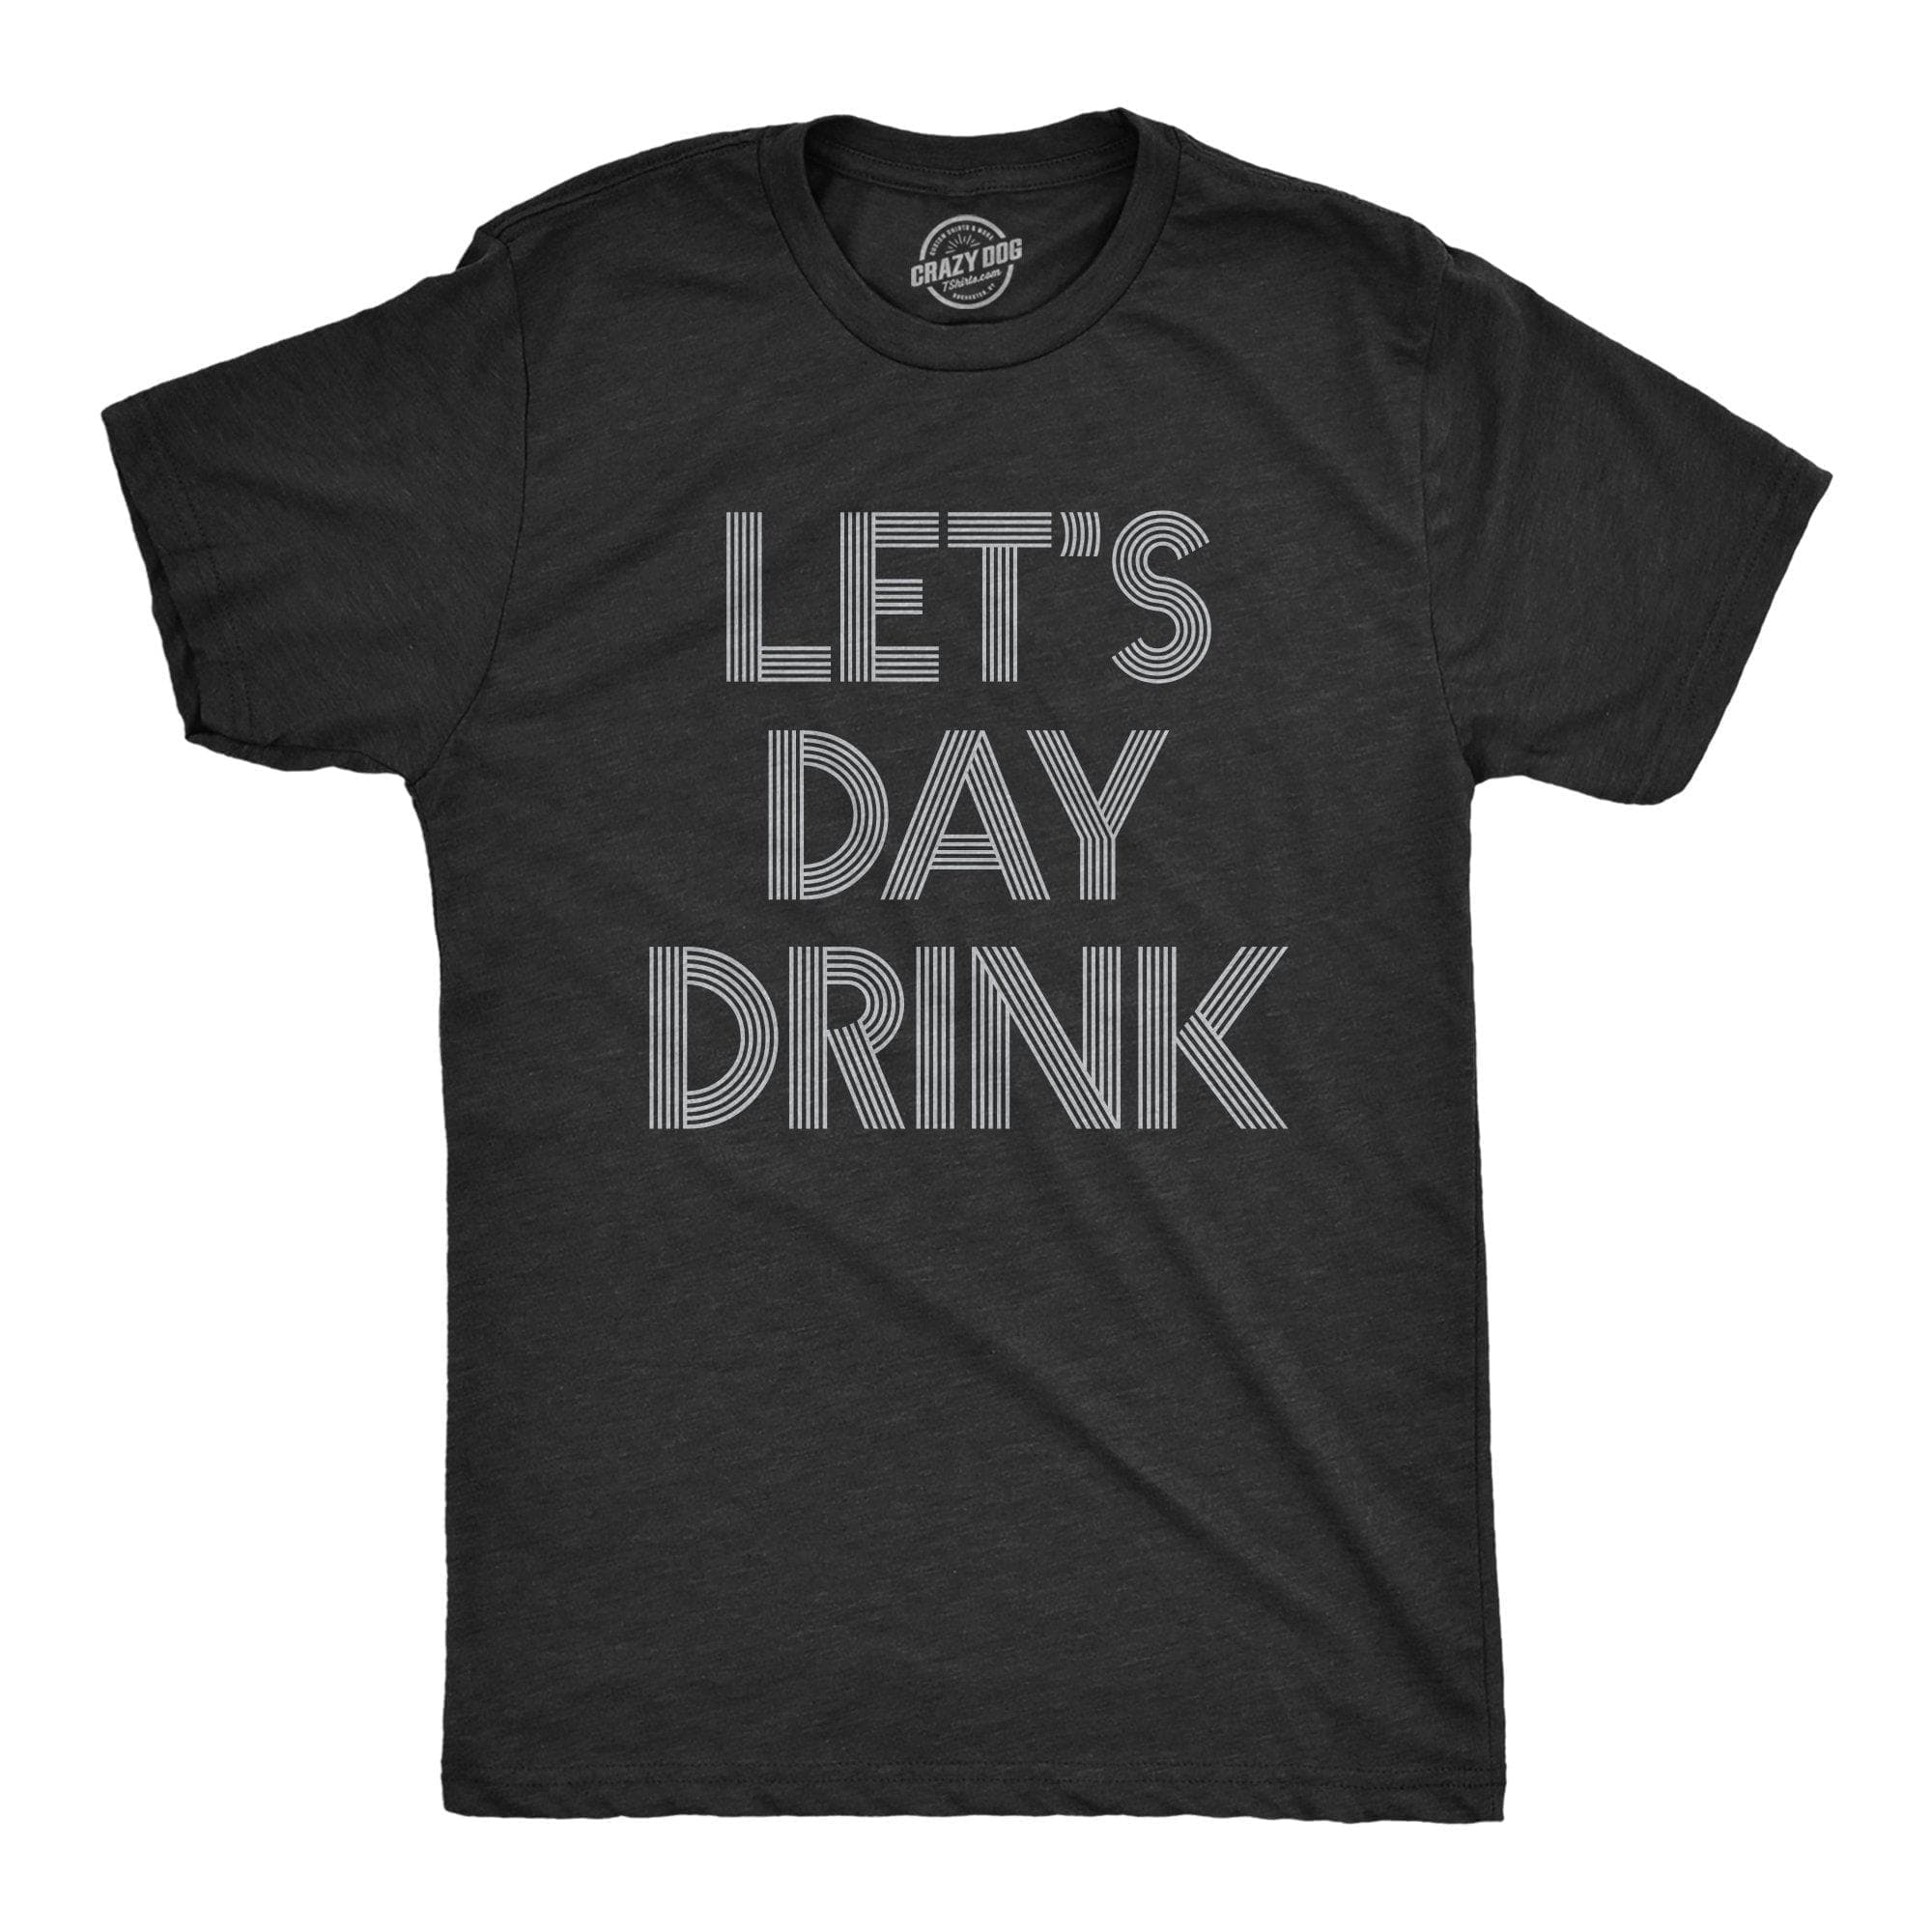 Let's Day Drink Men's Tshirt - Crazy Dog T-Shirts